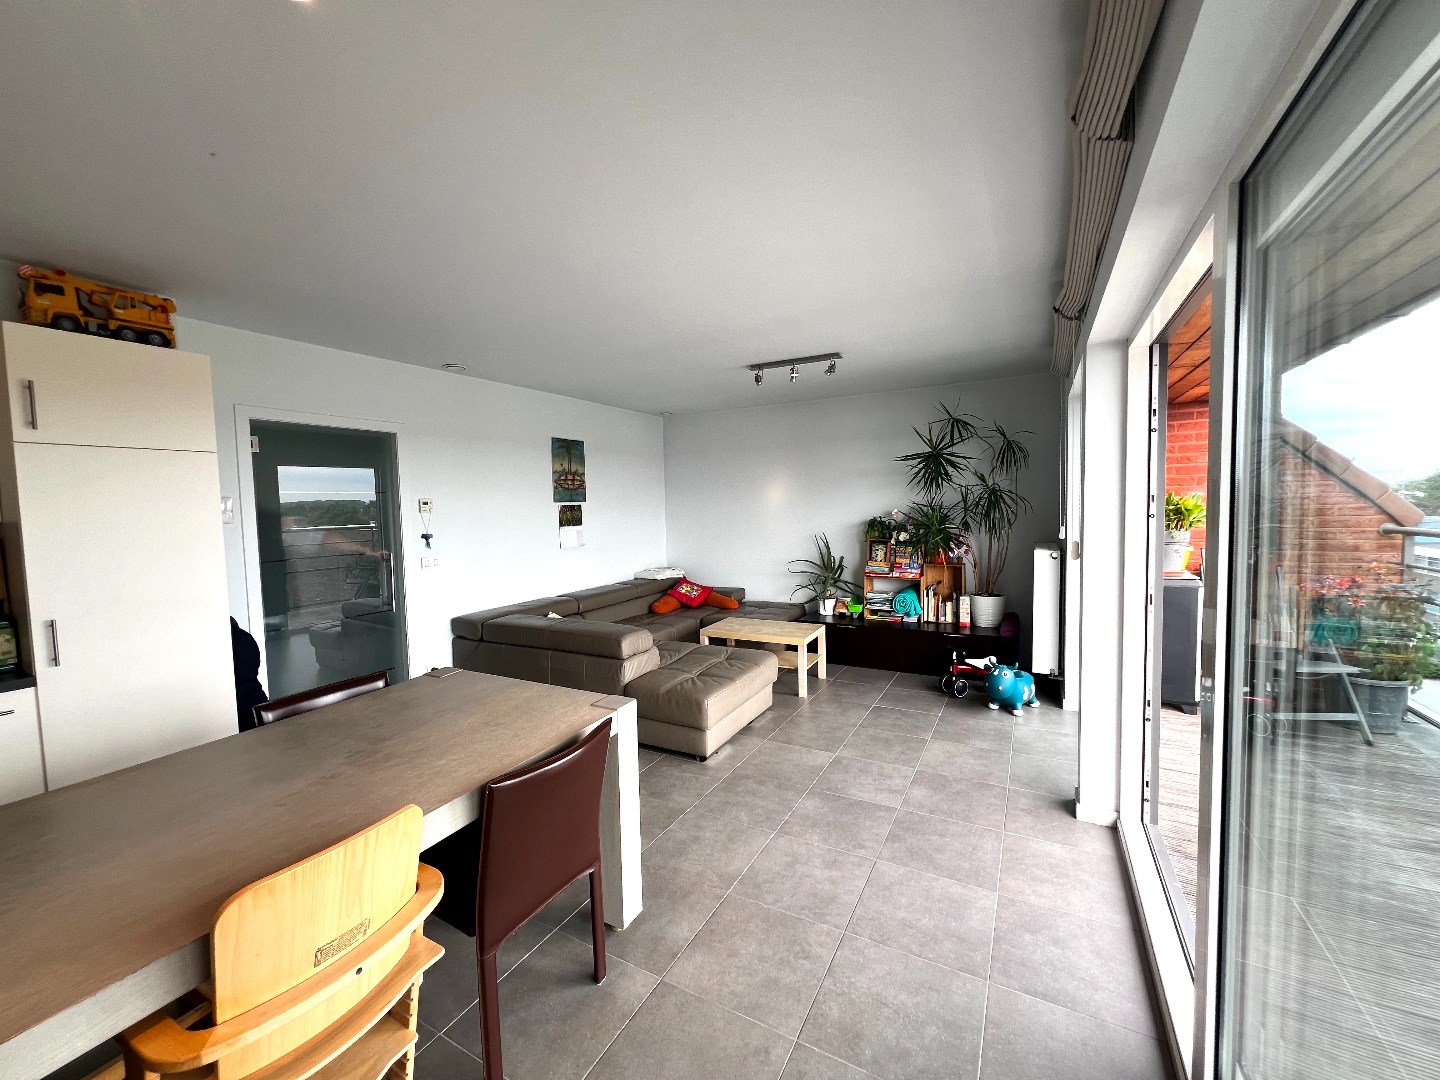 Instapklaar appartement met 2 slaapkamers, autostandplaats en kelderberging te koop te Harelbeke! foto 7